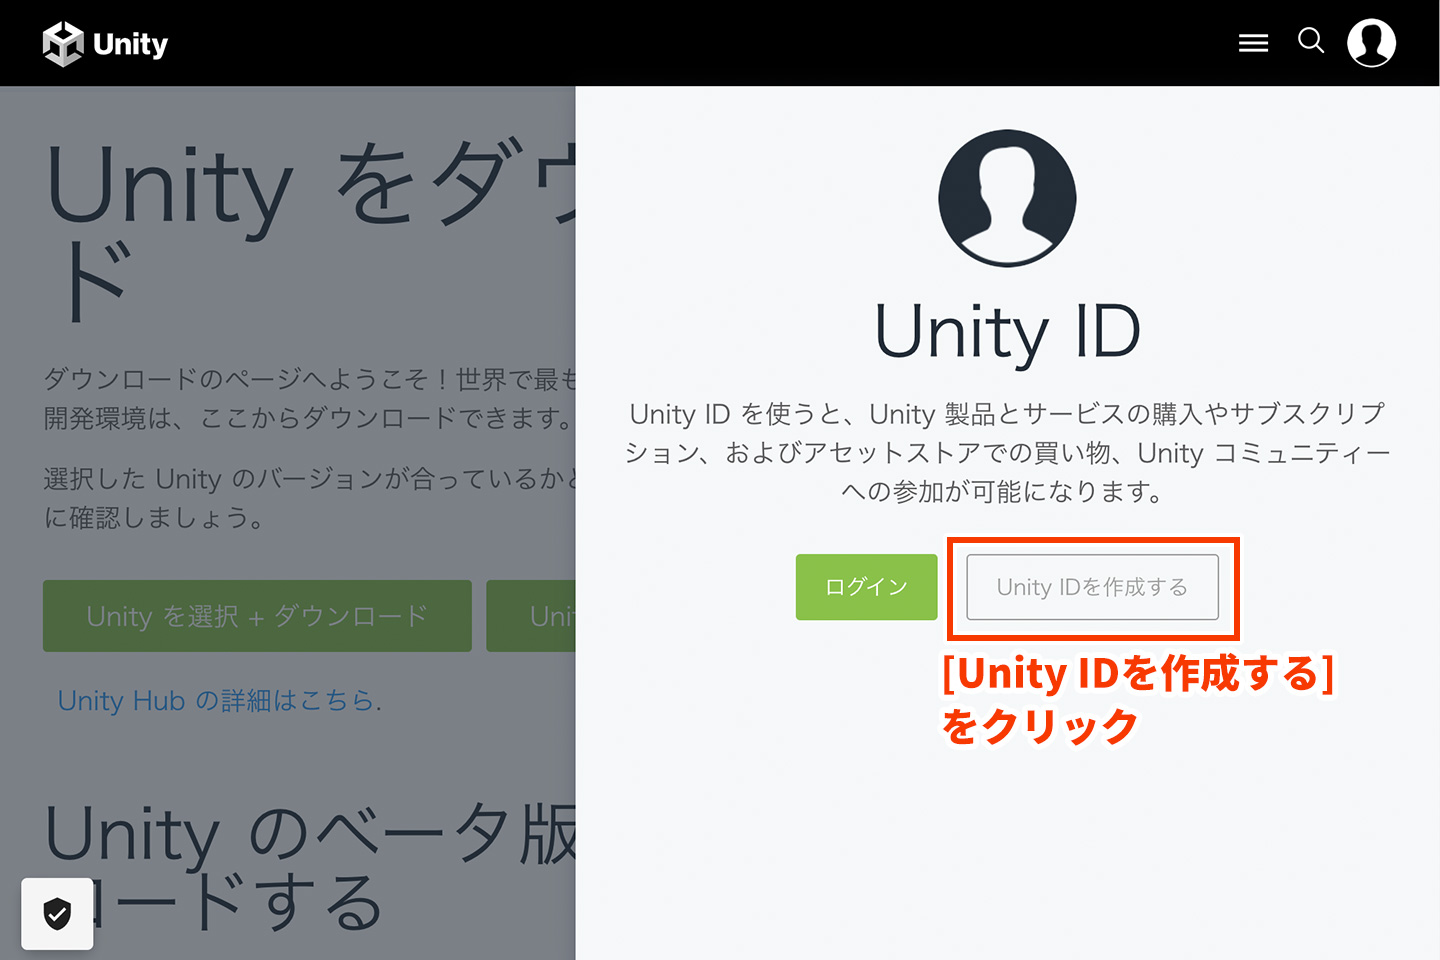 [Unity IDを作成する]をクリック